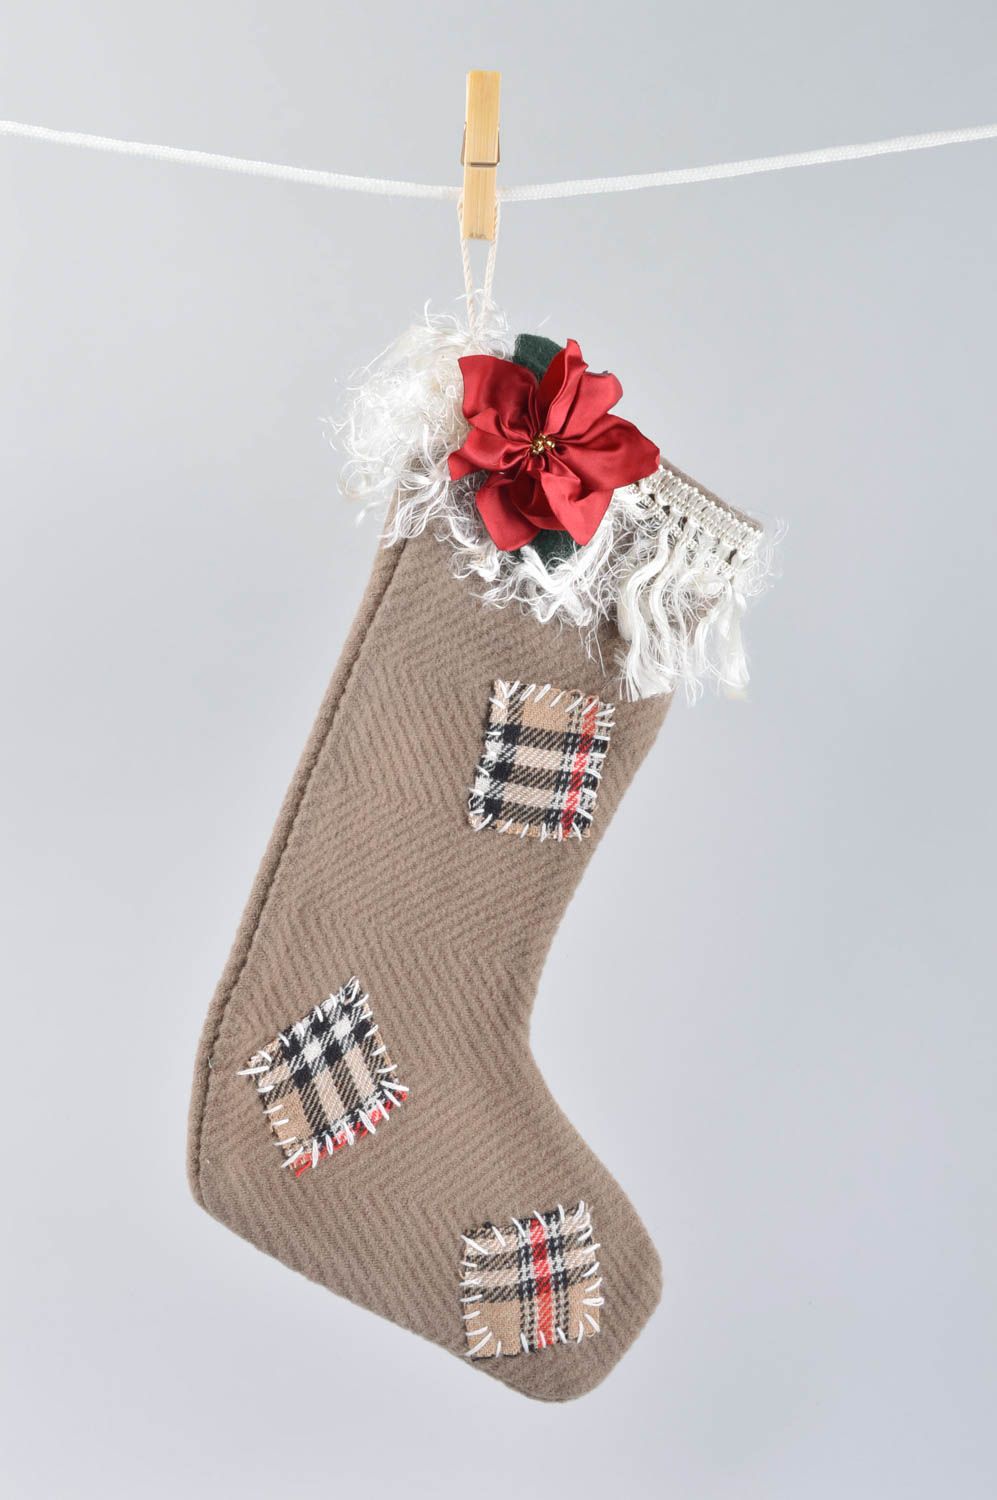 Homemade home decor Christmas stockings Xmas stockings souvenir ideas cool gifts photo 1